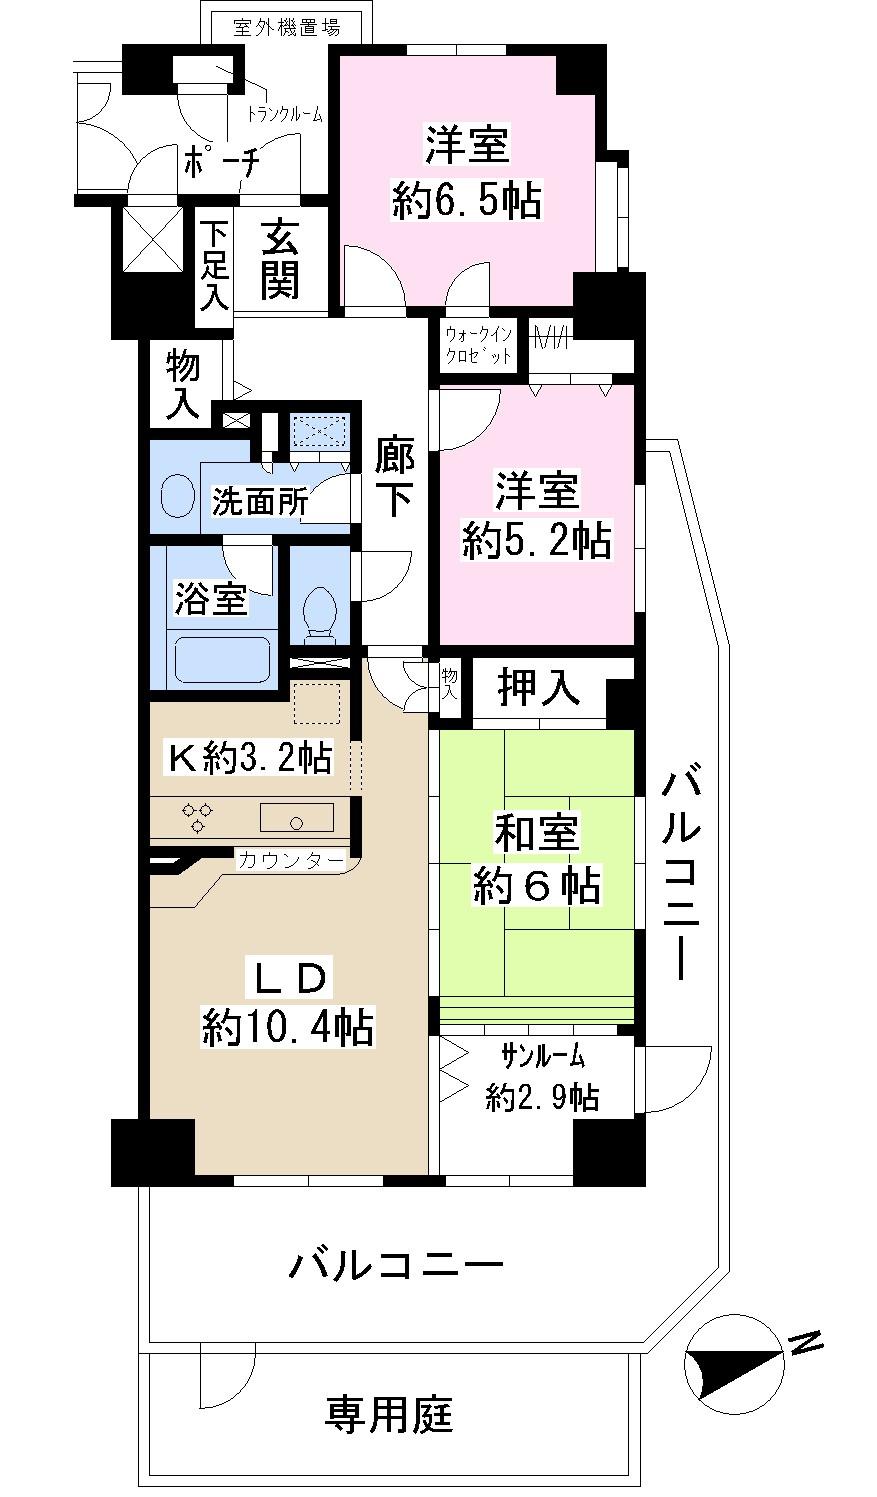 Floor plan. 3LDK + S (storeroom), Price 30,700,000 yen, Occupied area 79.57 sq m , Balcony area 22.1 sq m